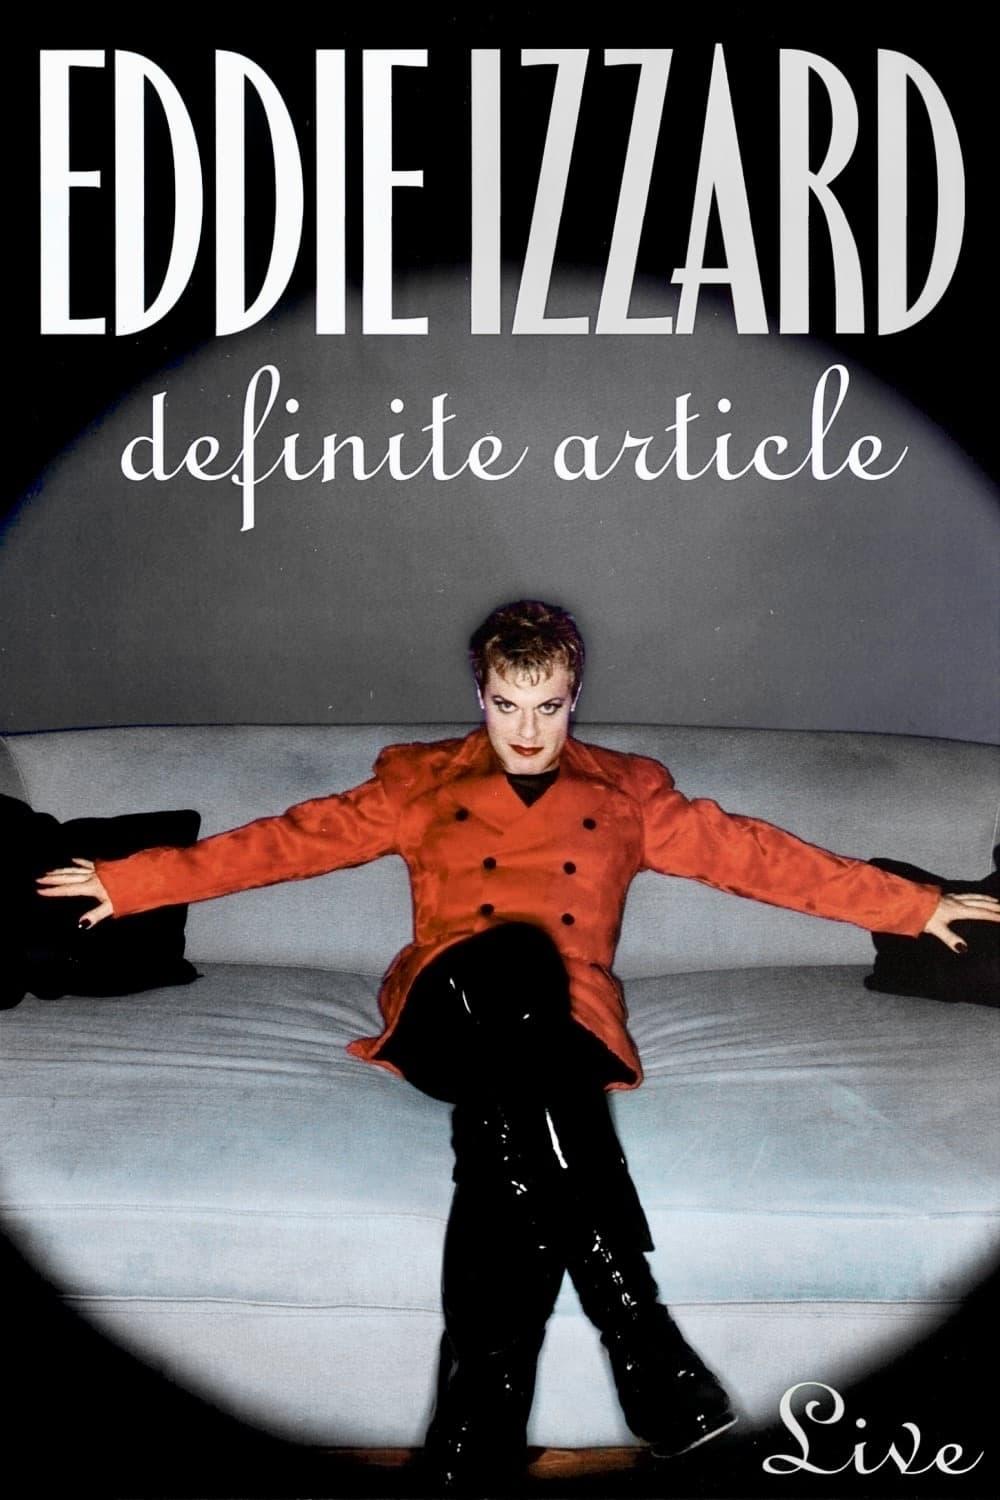 Eddie Izzard: Definite Article poster